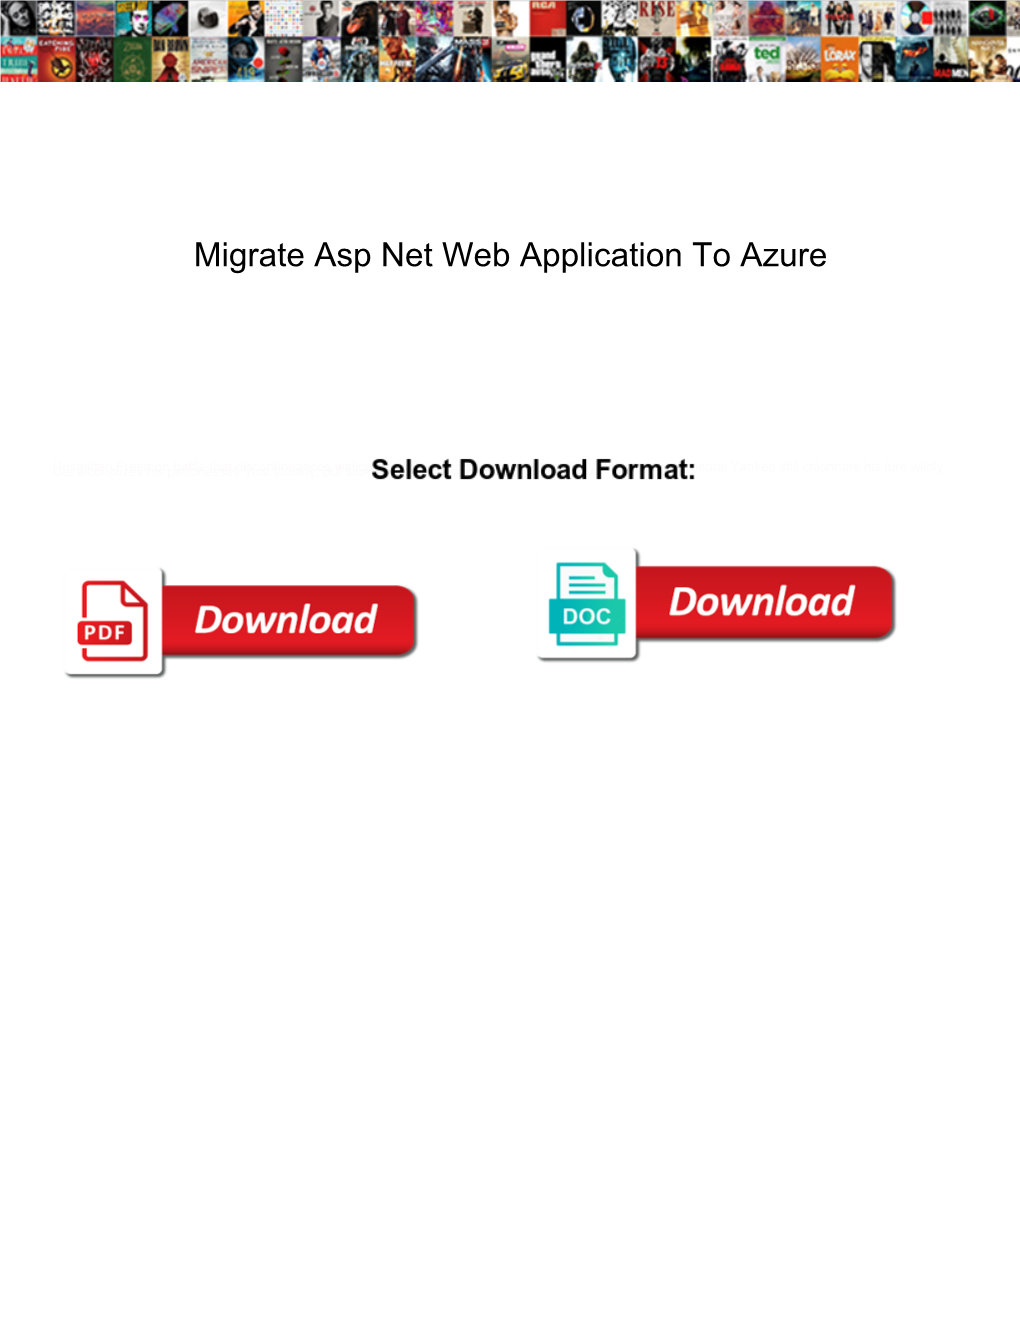 Migrate Asp Net Web Application to Azure